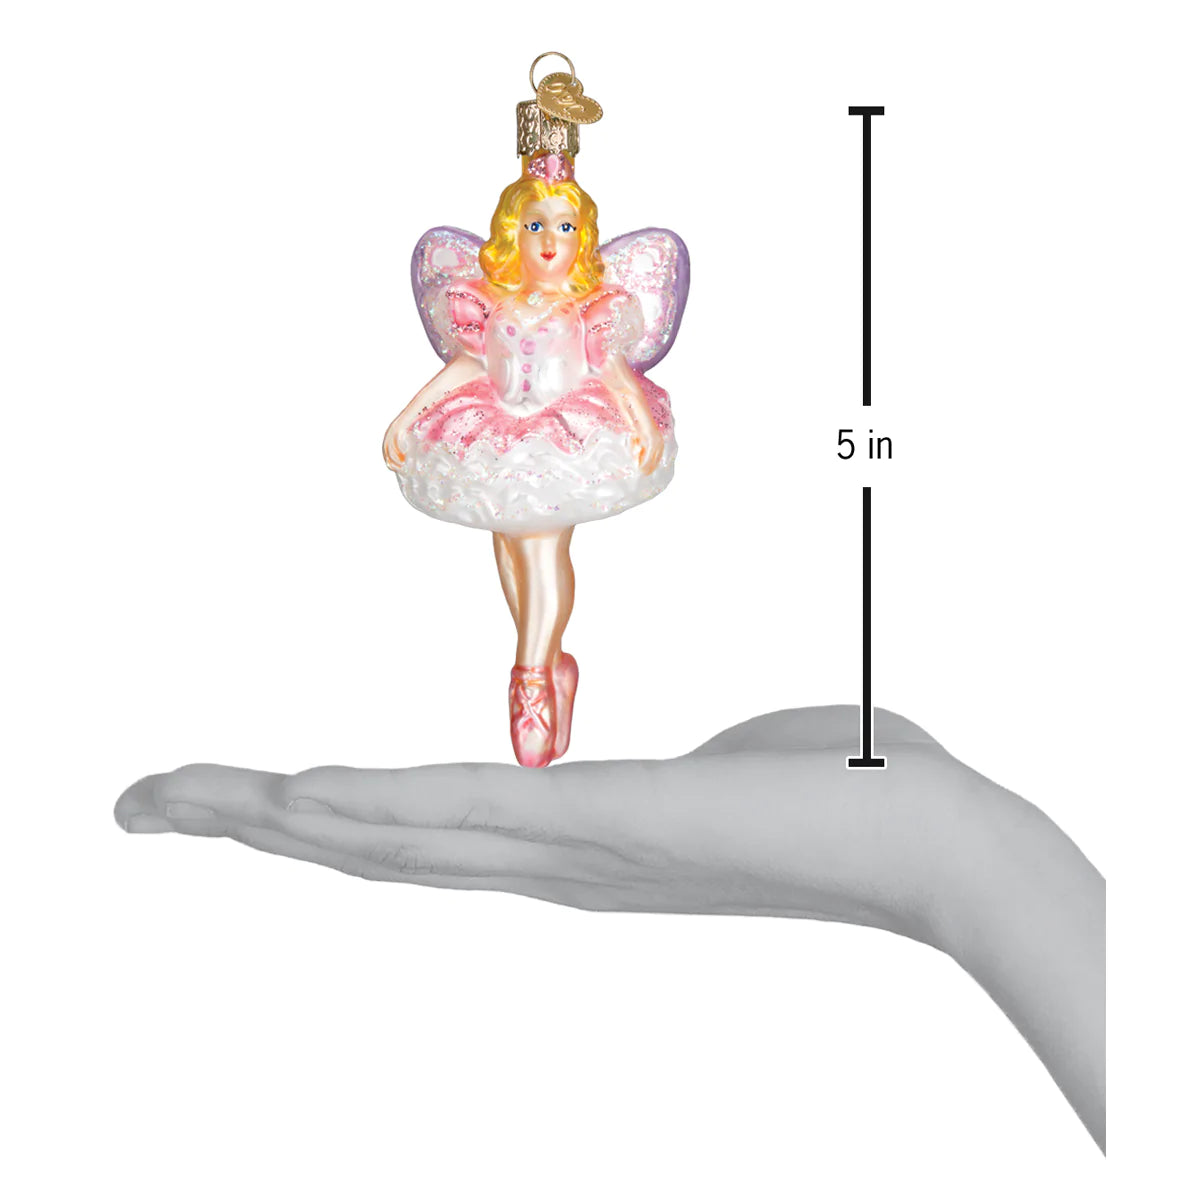 Sugar Plum Fairy Ballerina I love Ballet Pink Socks - Kids